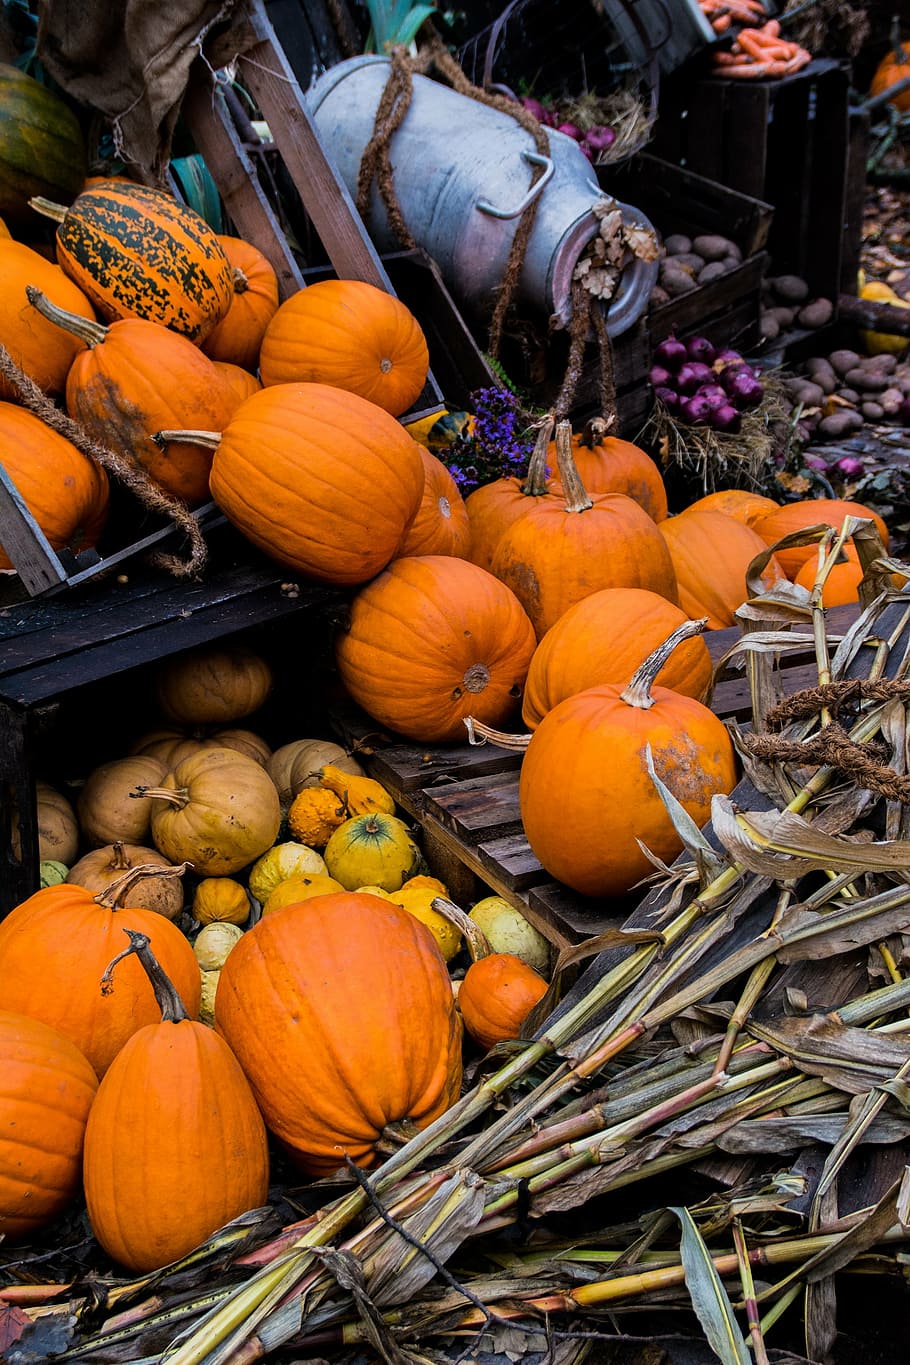 halloween, autumn, pumpkin, vegetable, orange Color, agriculture, food, thanksgiving, gourd, food and drink